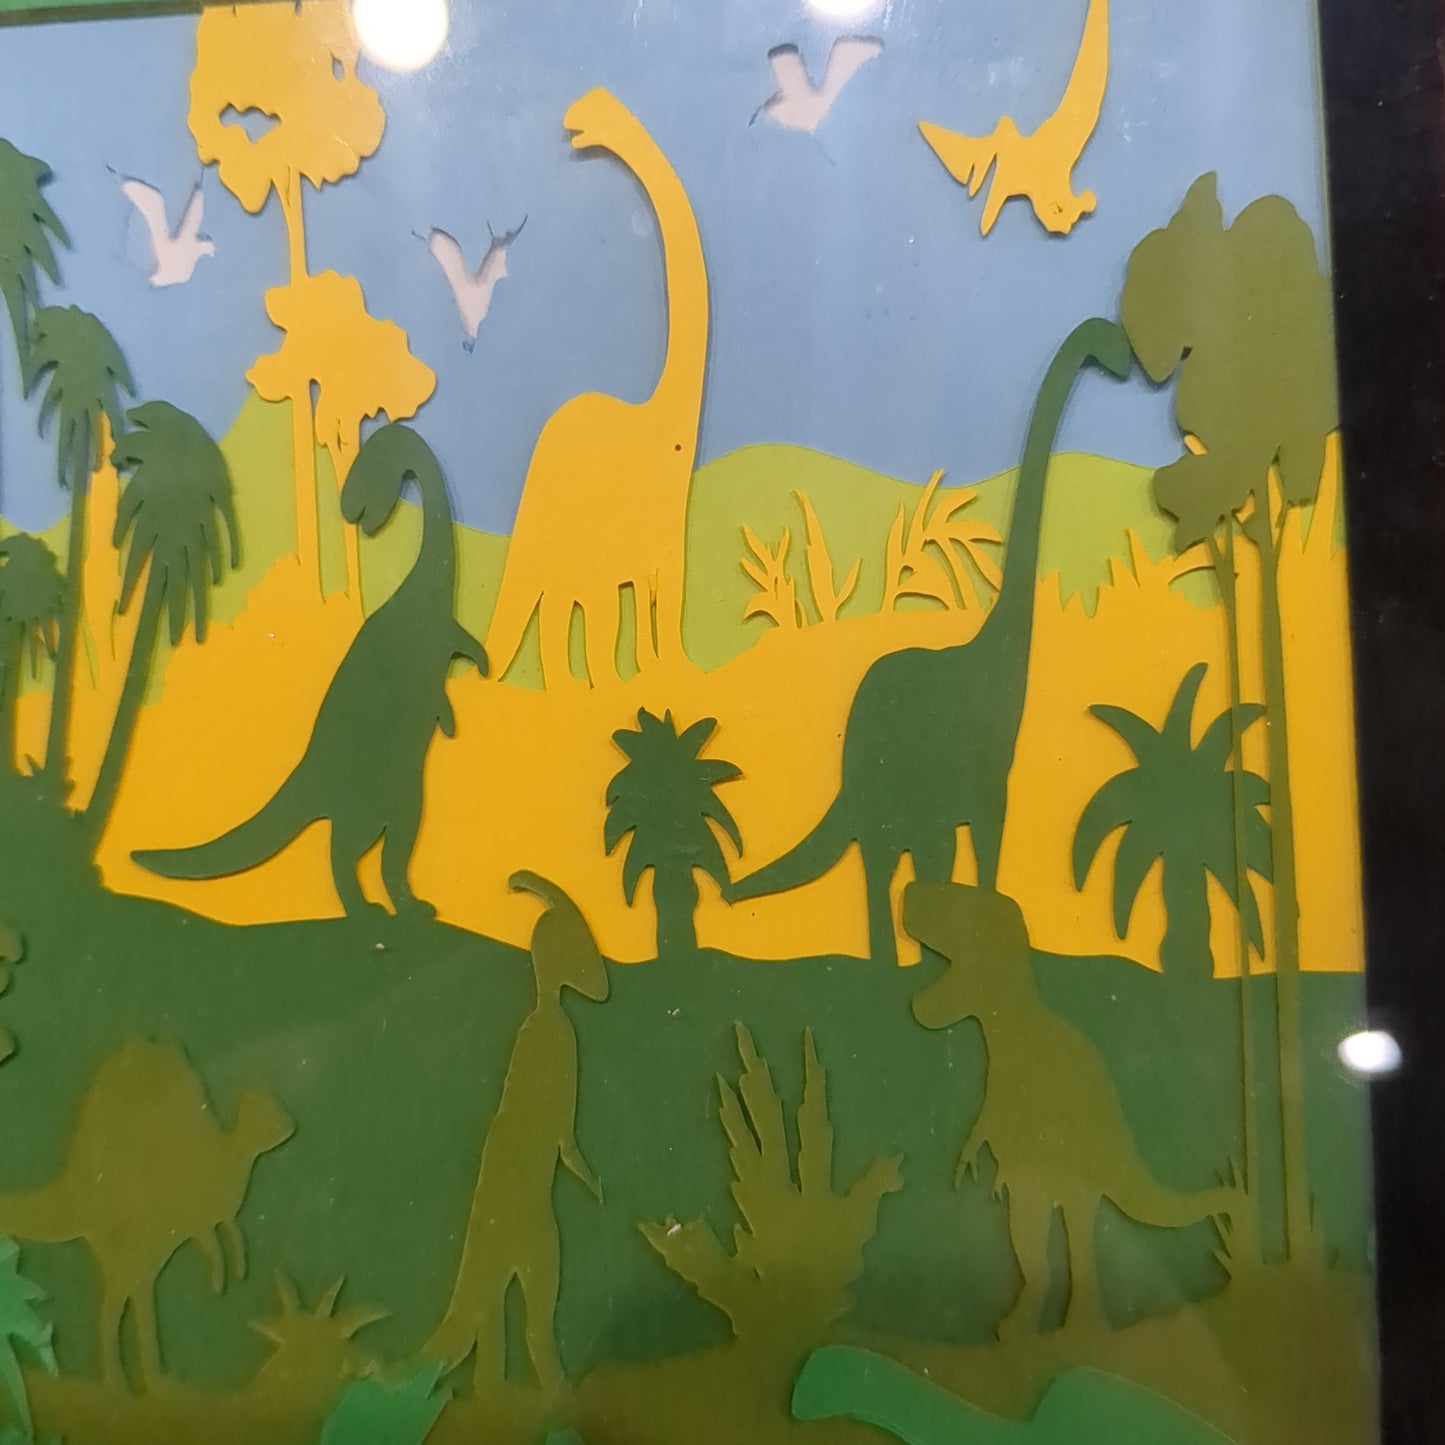 8 x 10” frame with 5 x 7" paper cut dinosaur scene